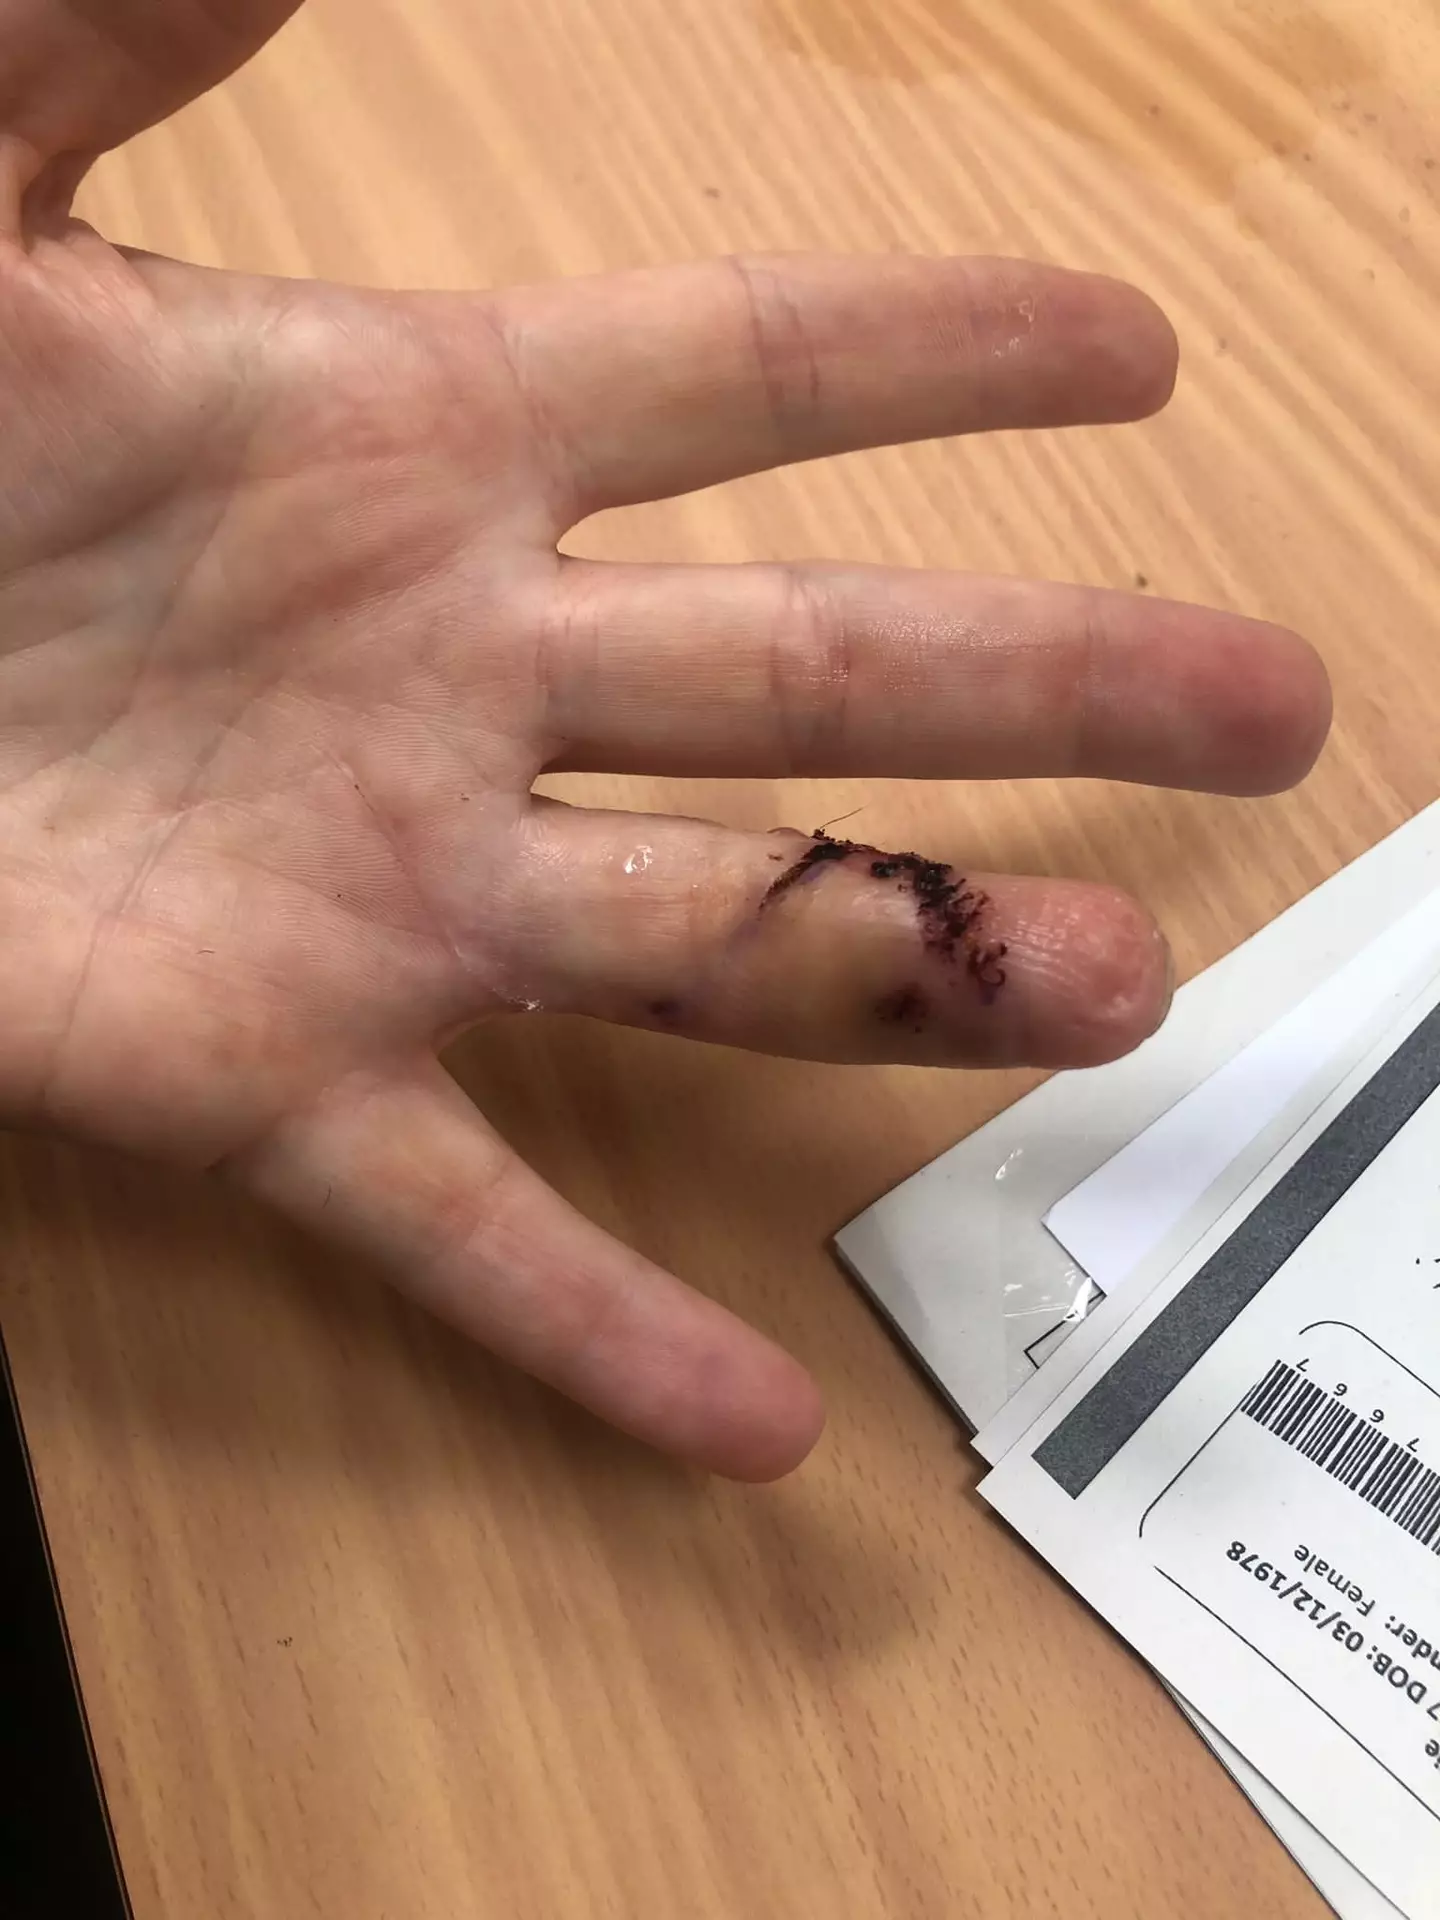 Medics spent six hours reattaching the finger.